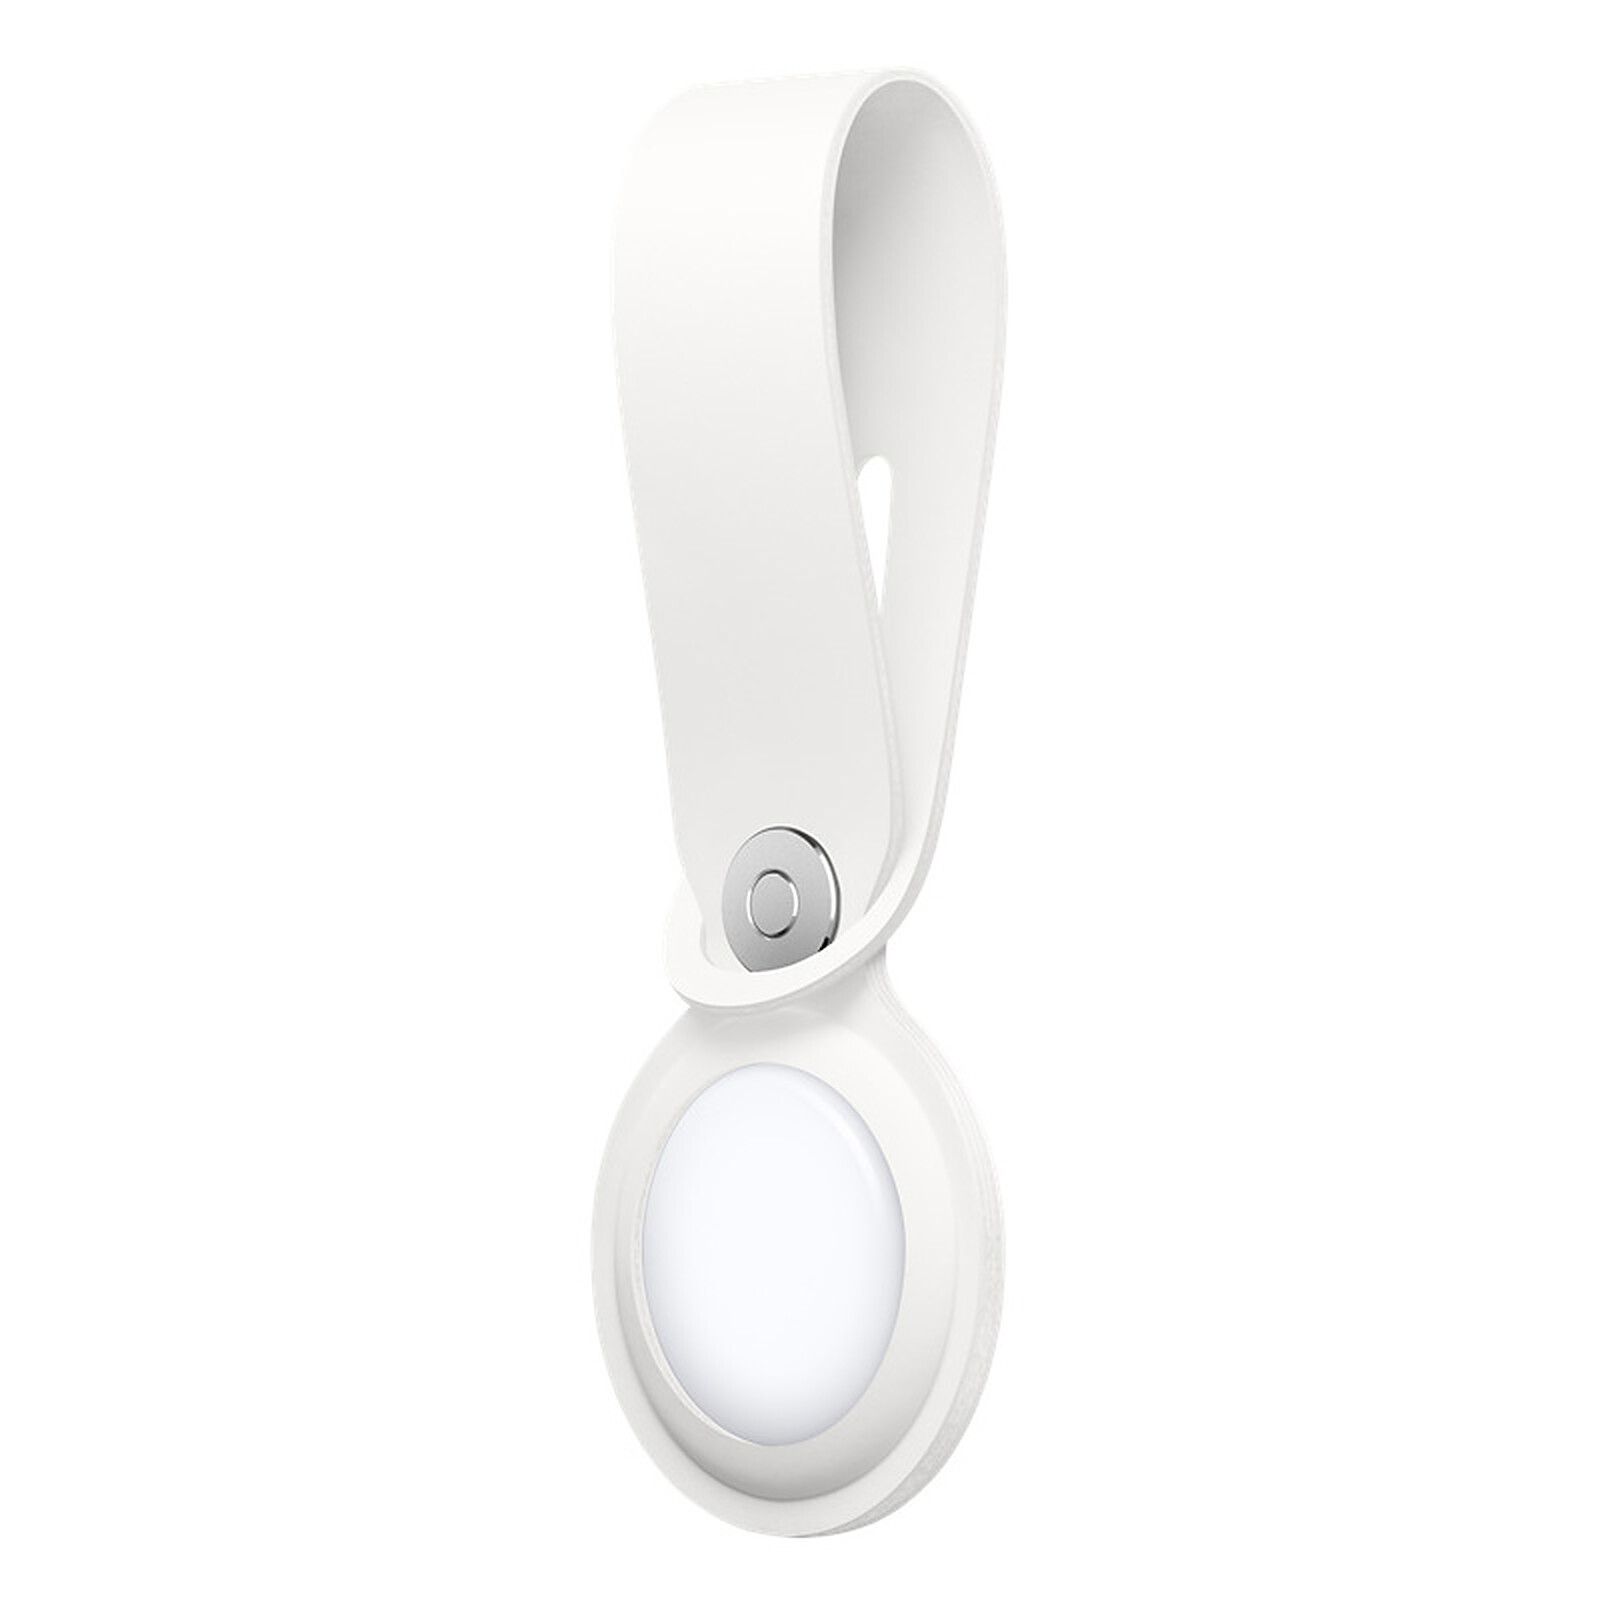 Apple AirTag Loop White iPhone accessories Apple on LDLC